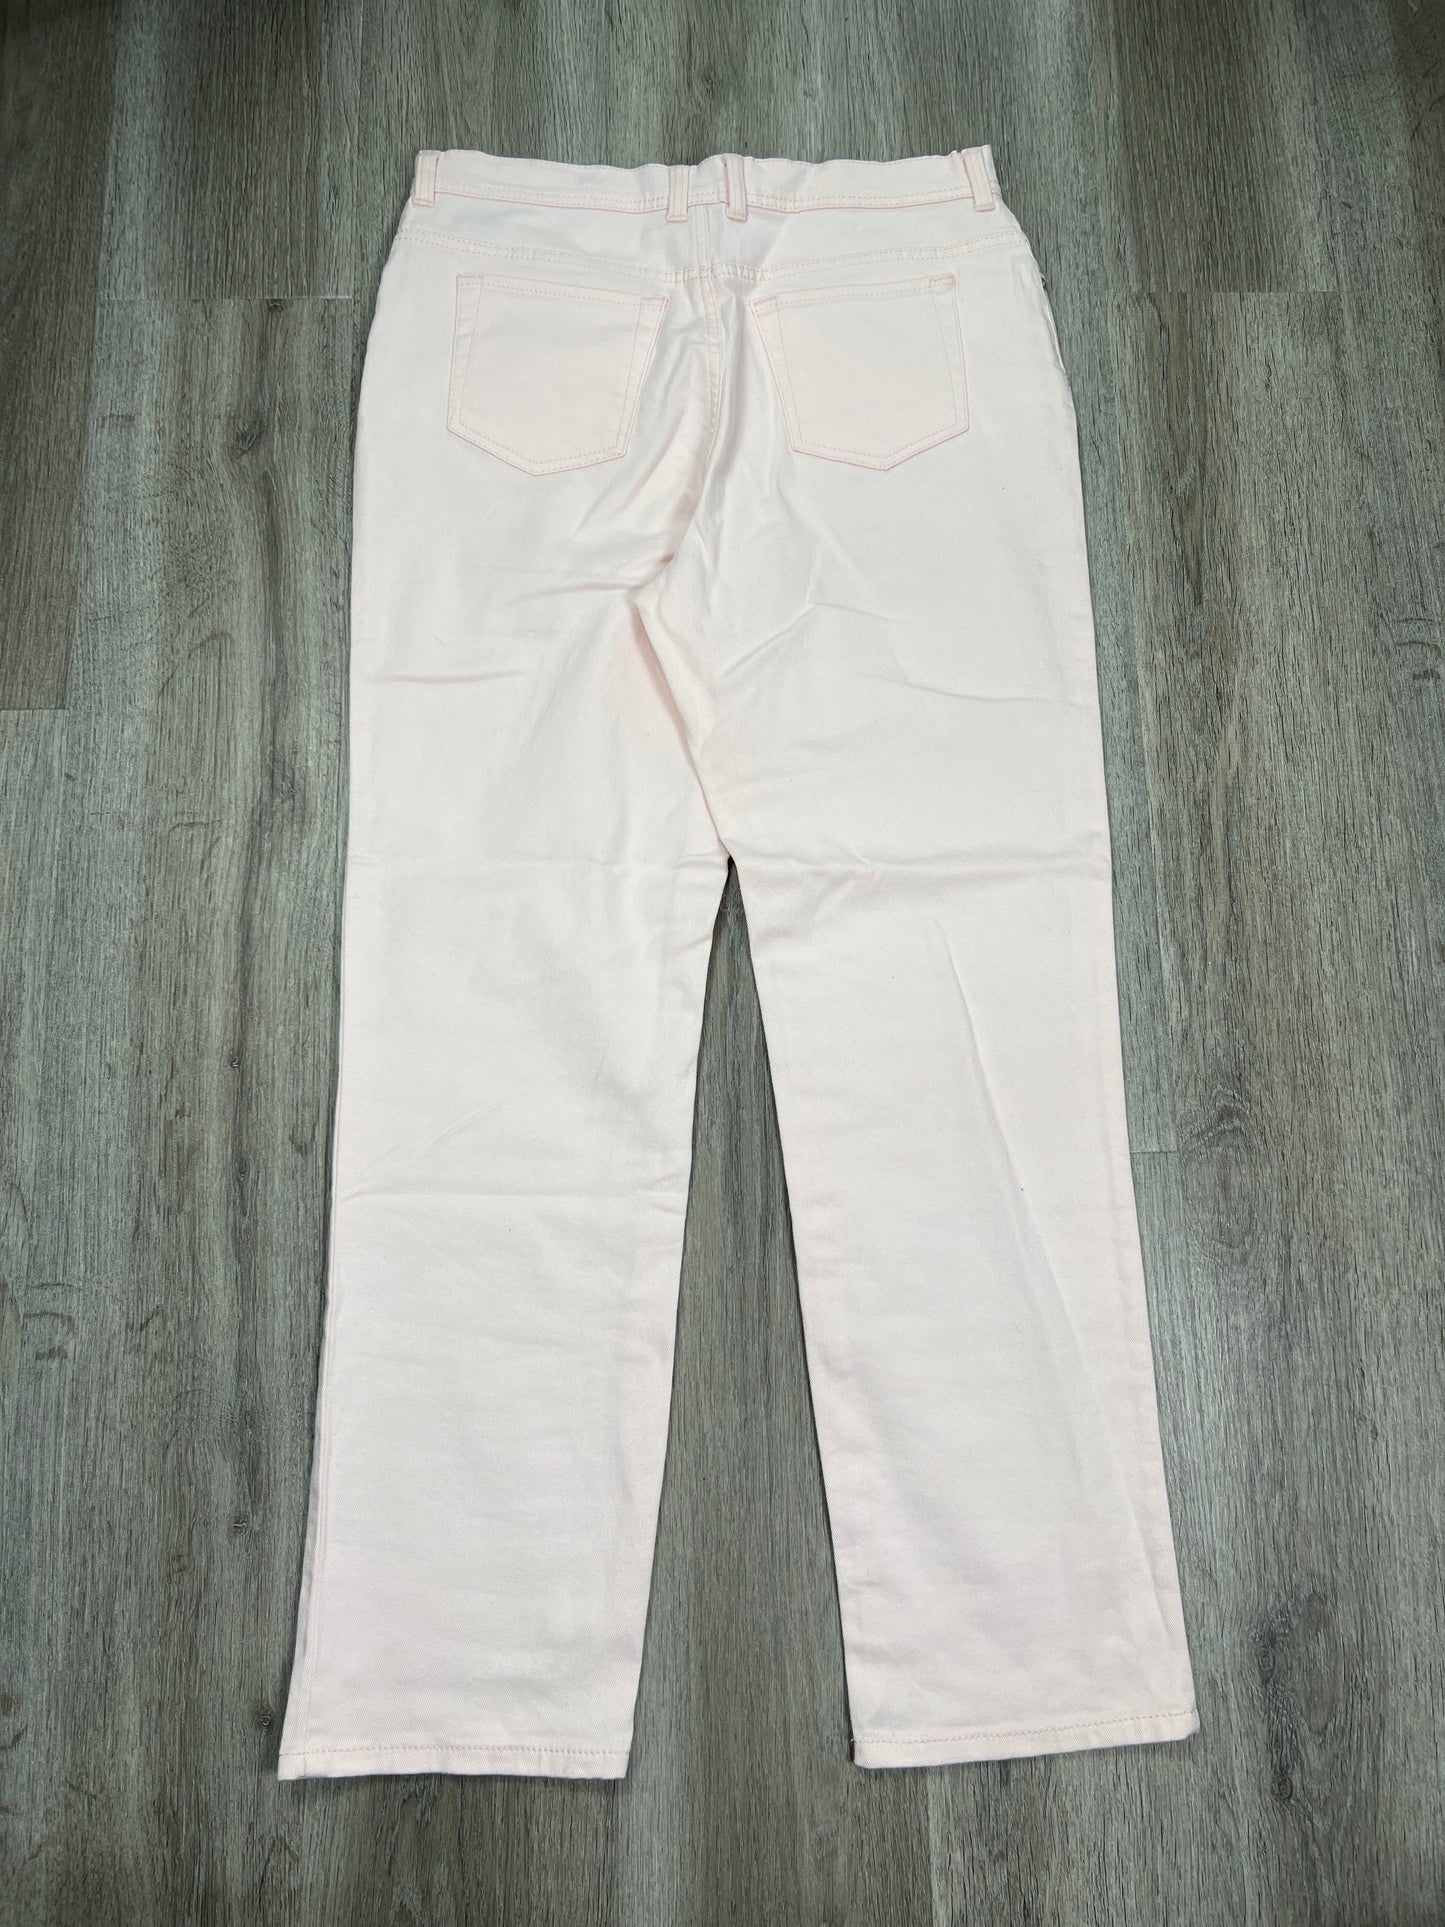 Pink Denim Jeans Straight Gloria Vanderbilt, Size 12